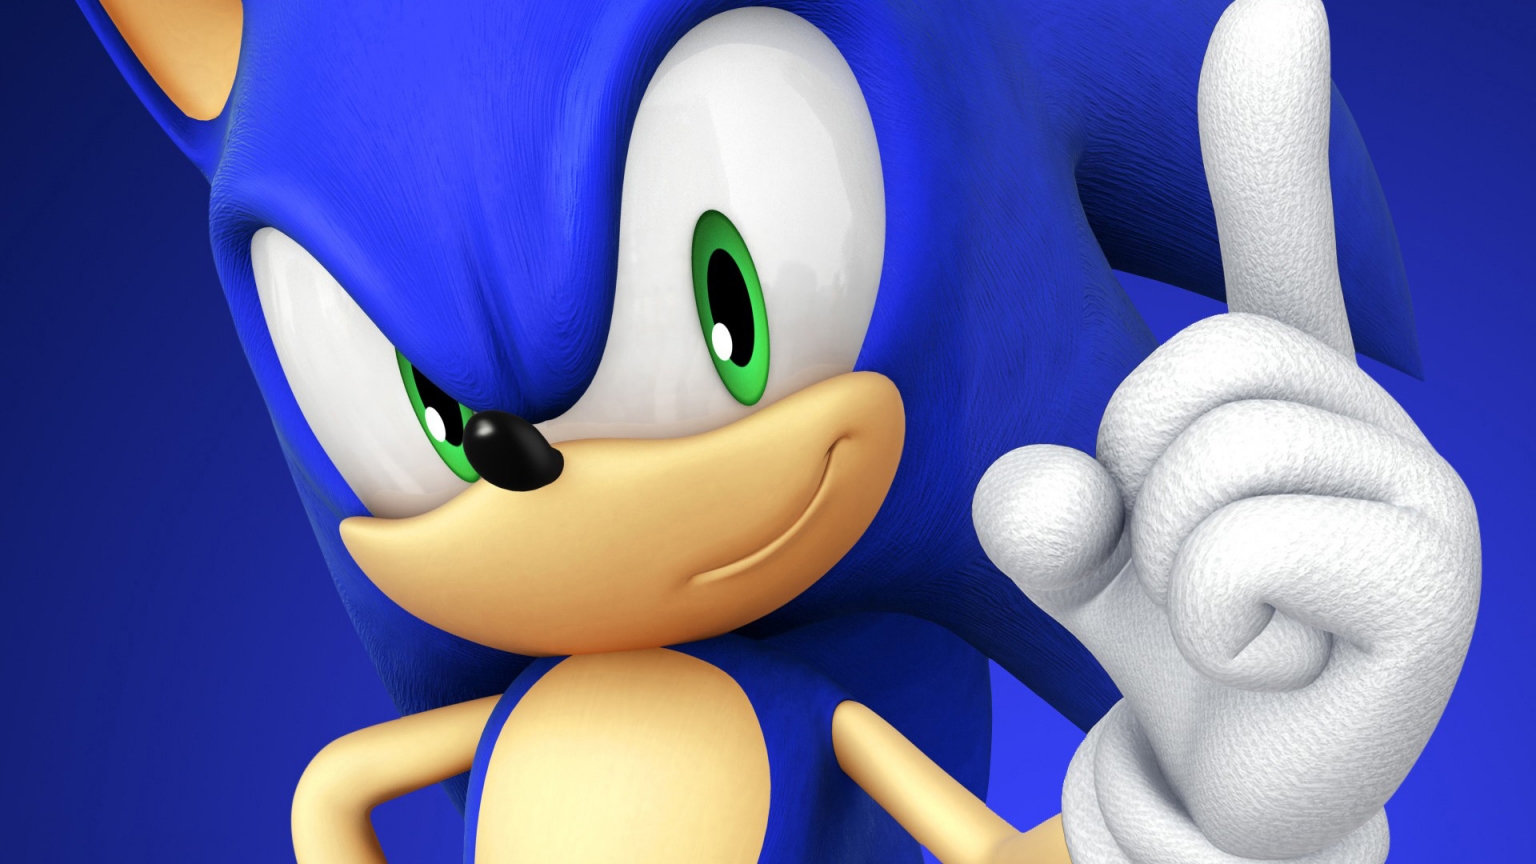 Sonic Hedgehog for 1536 x 864 HDTV resolution